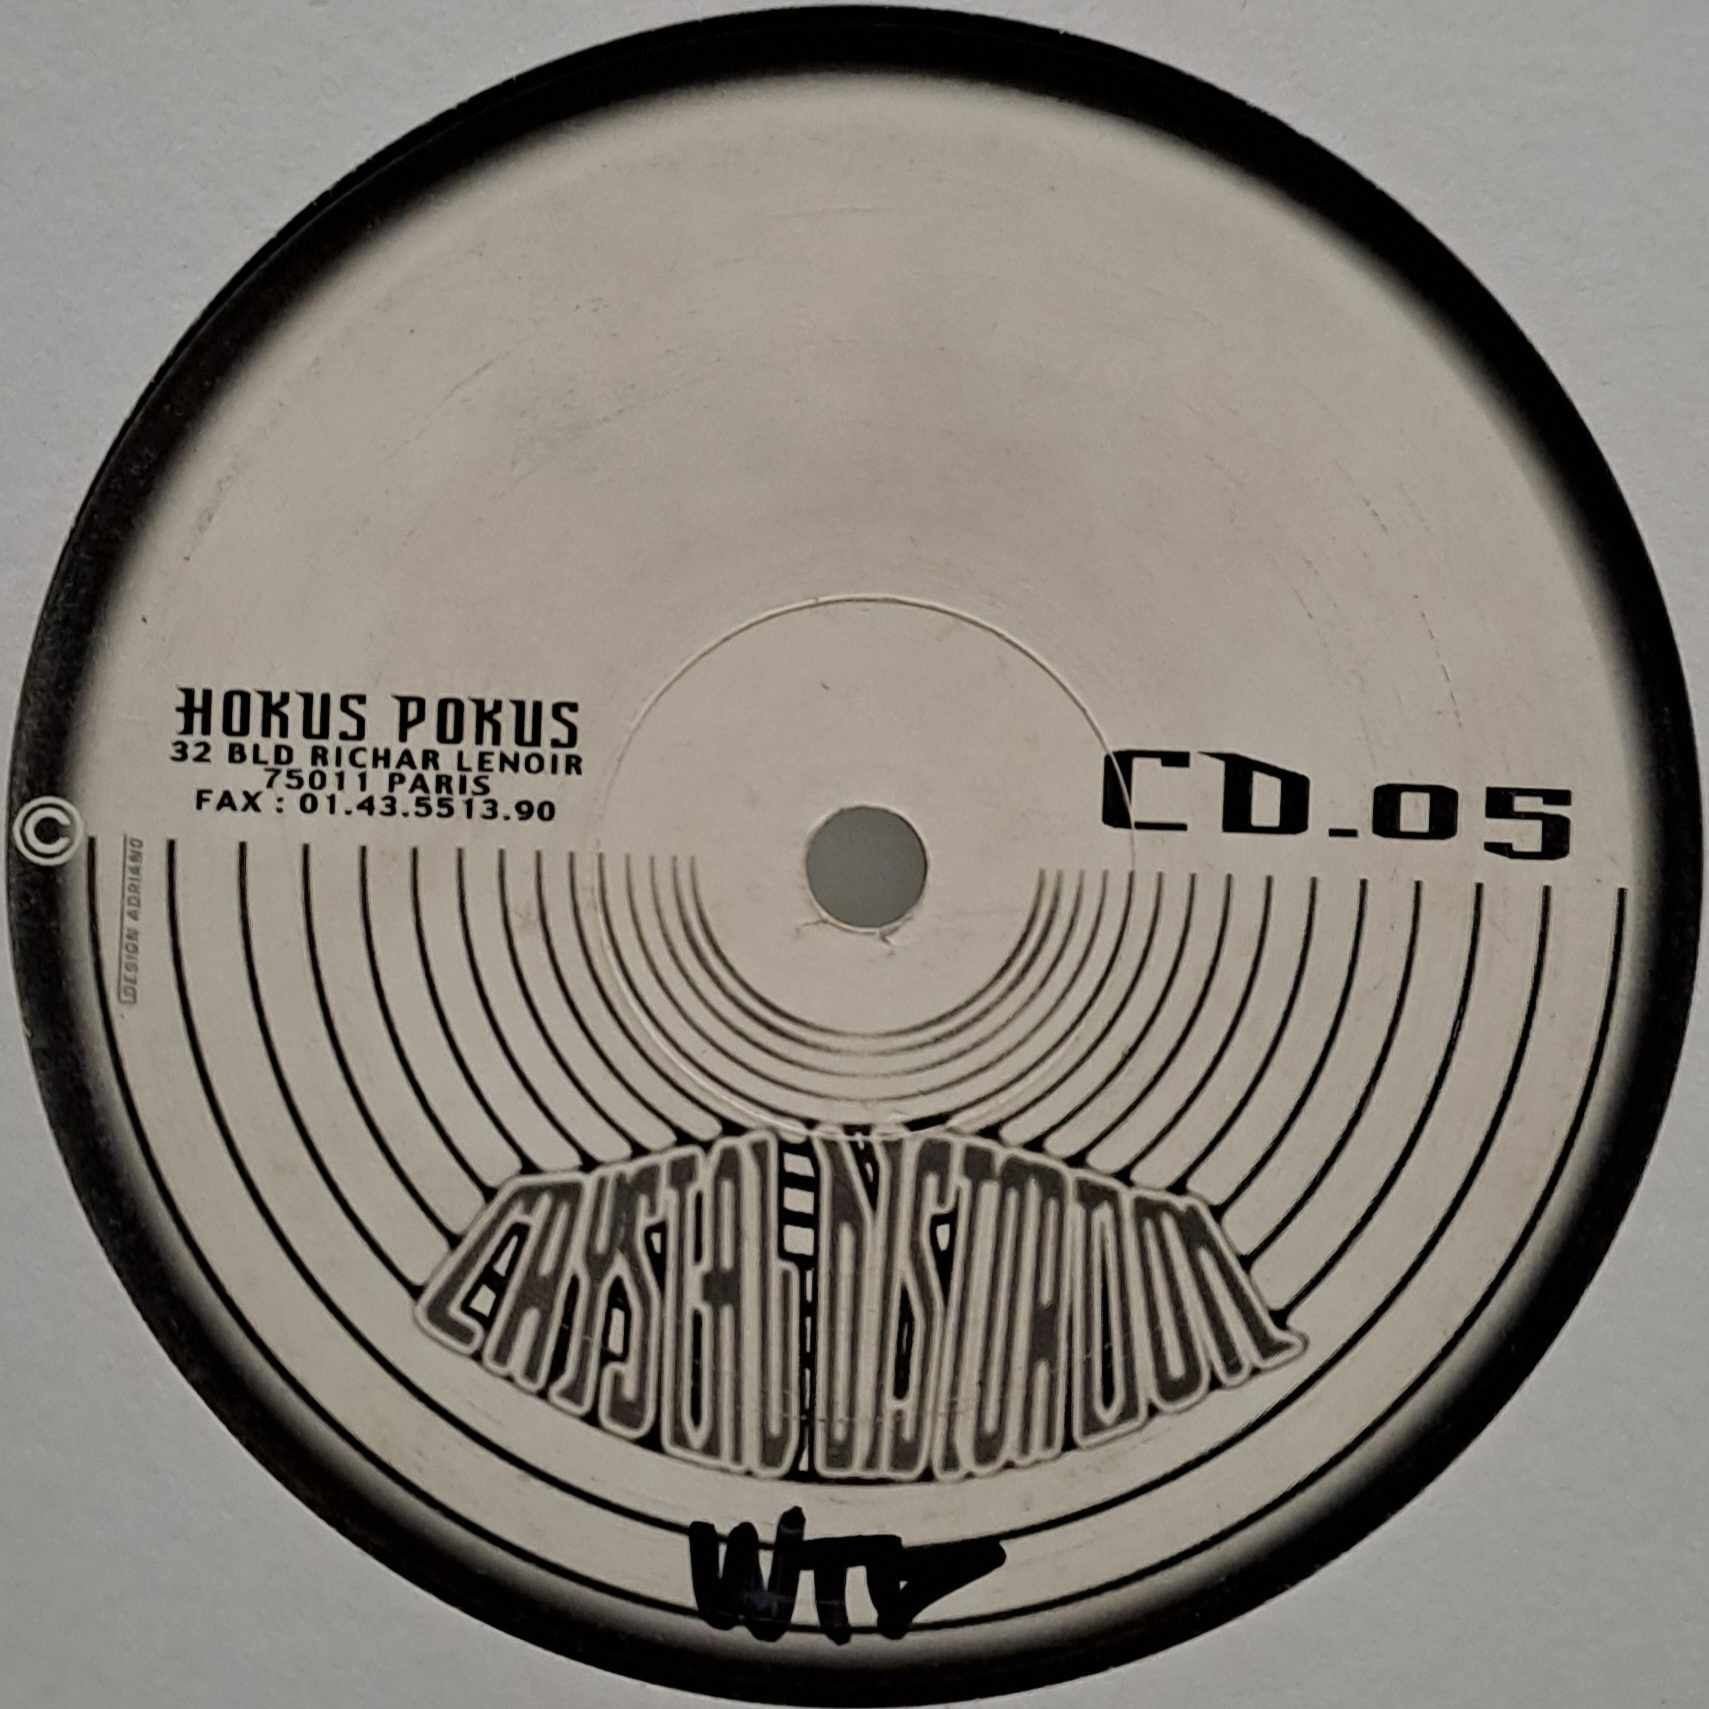 CD 005 - vinyle Breakbeat
